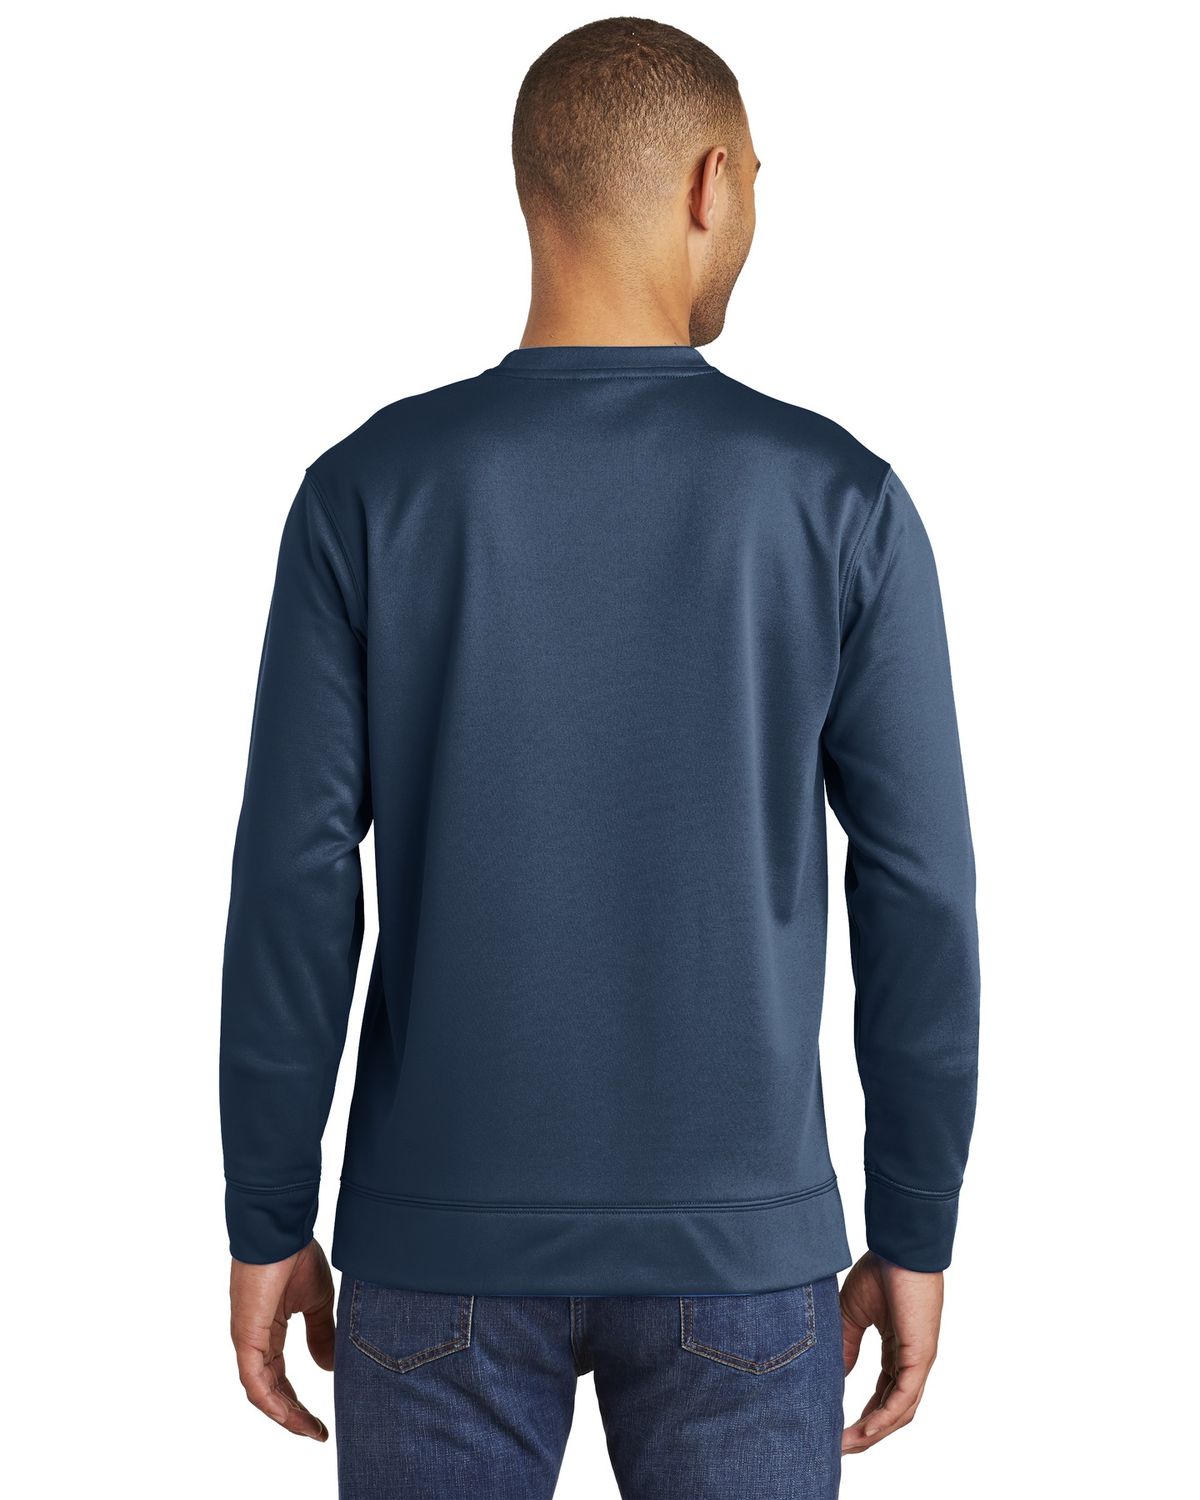 'Port & Company PC590 Performance Fleece Crewneck Sweatshirt'